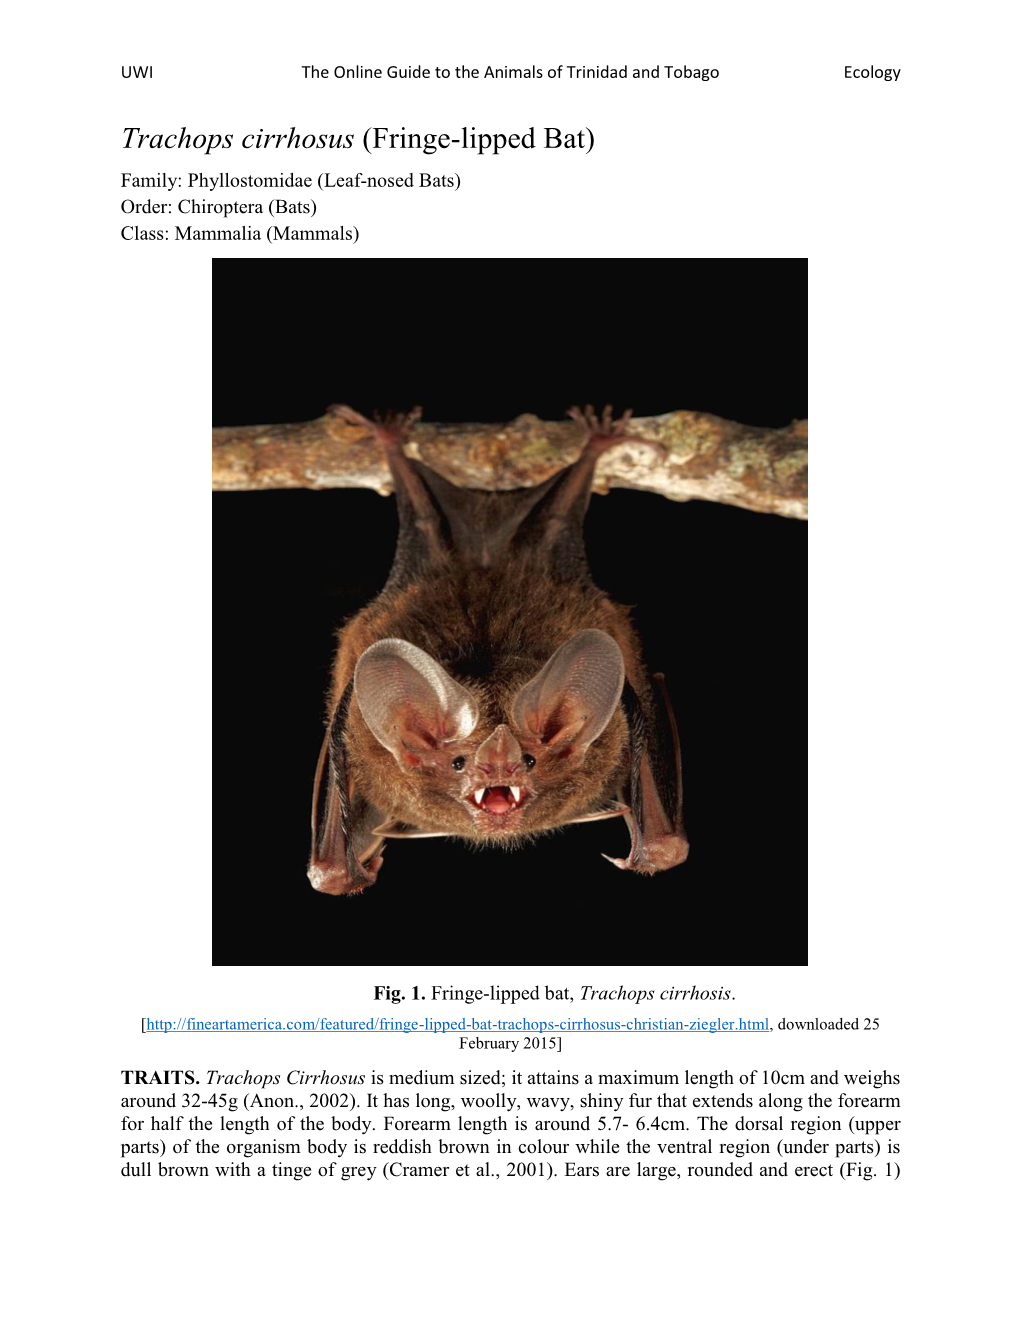 Trachops Cirrhosus (Fringe-Lipped Bat) Family: Phyllostomidae (Leaf-Nosed Bats) Order: Chiroptera (Bats) Class: Mammalia (Mammals)